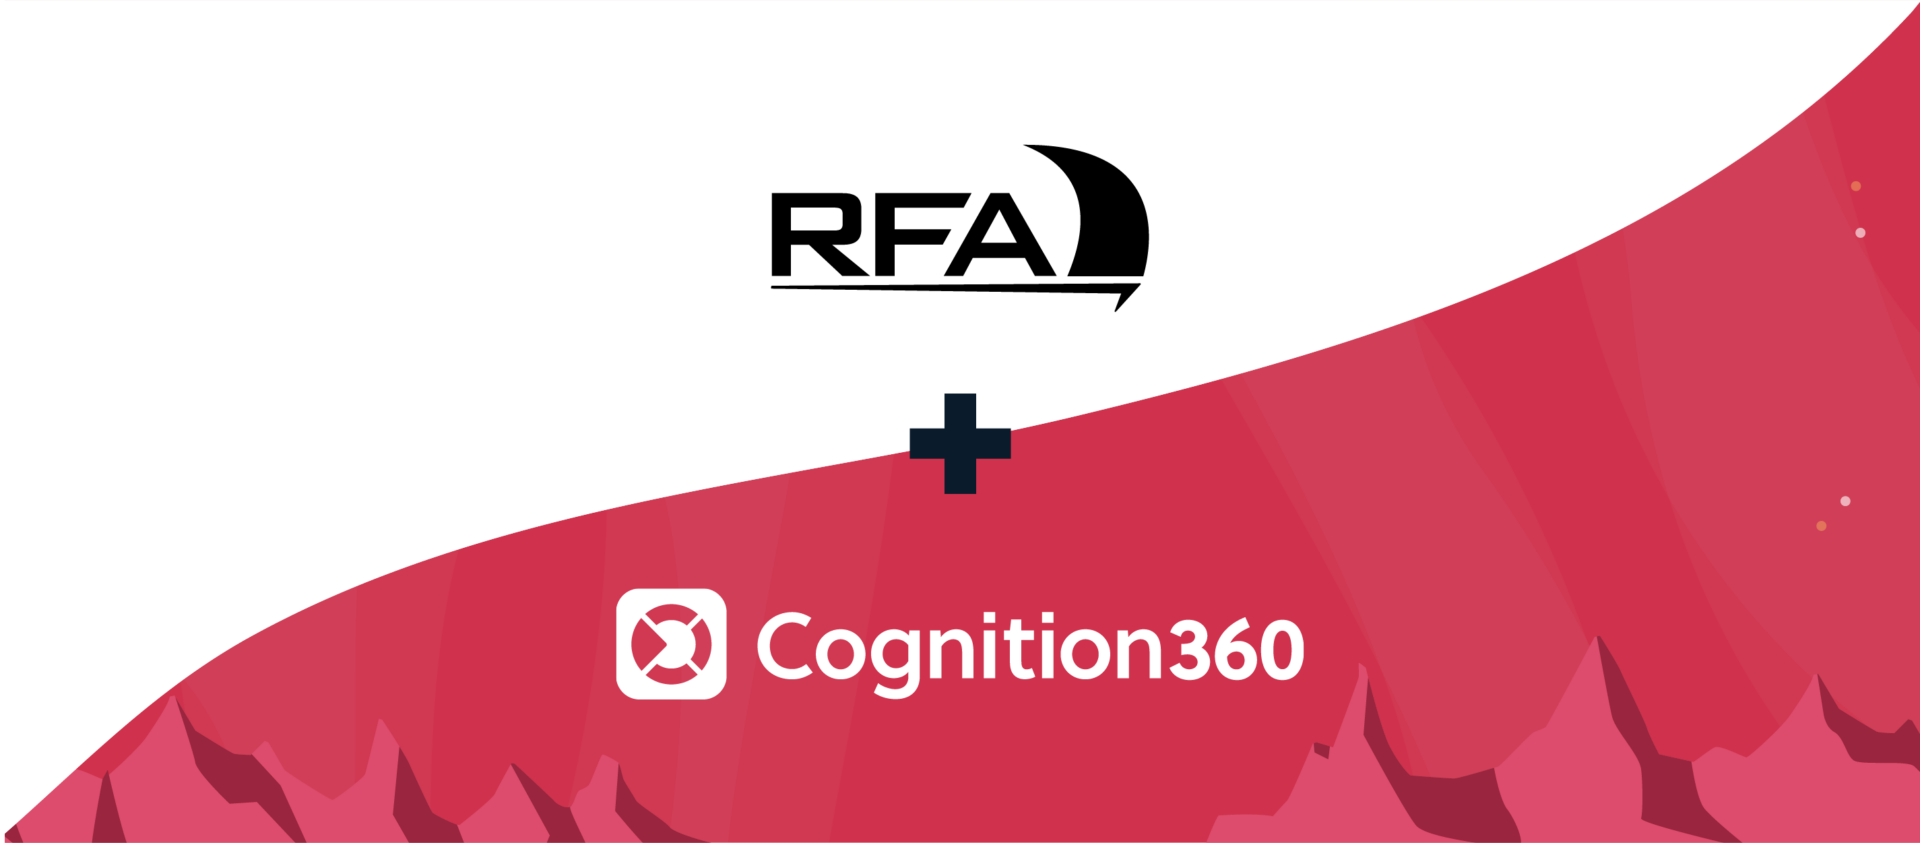 Cognition360 RFA customer story